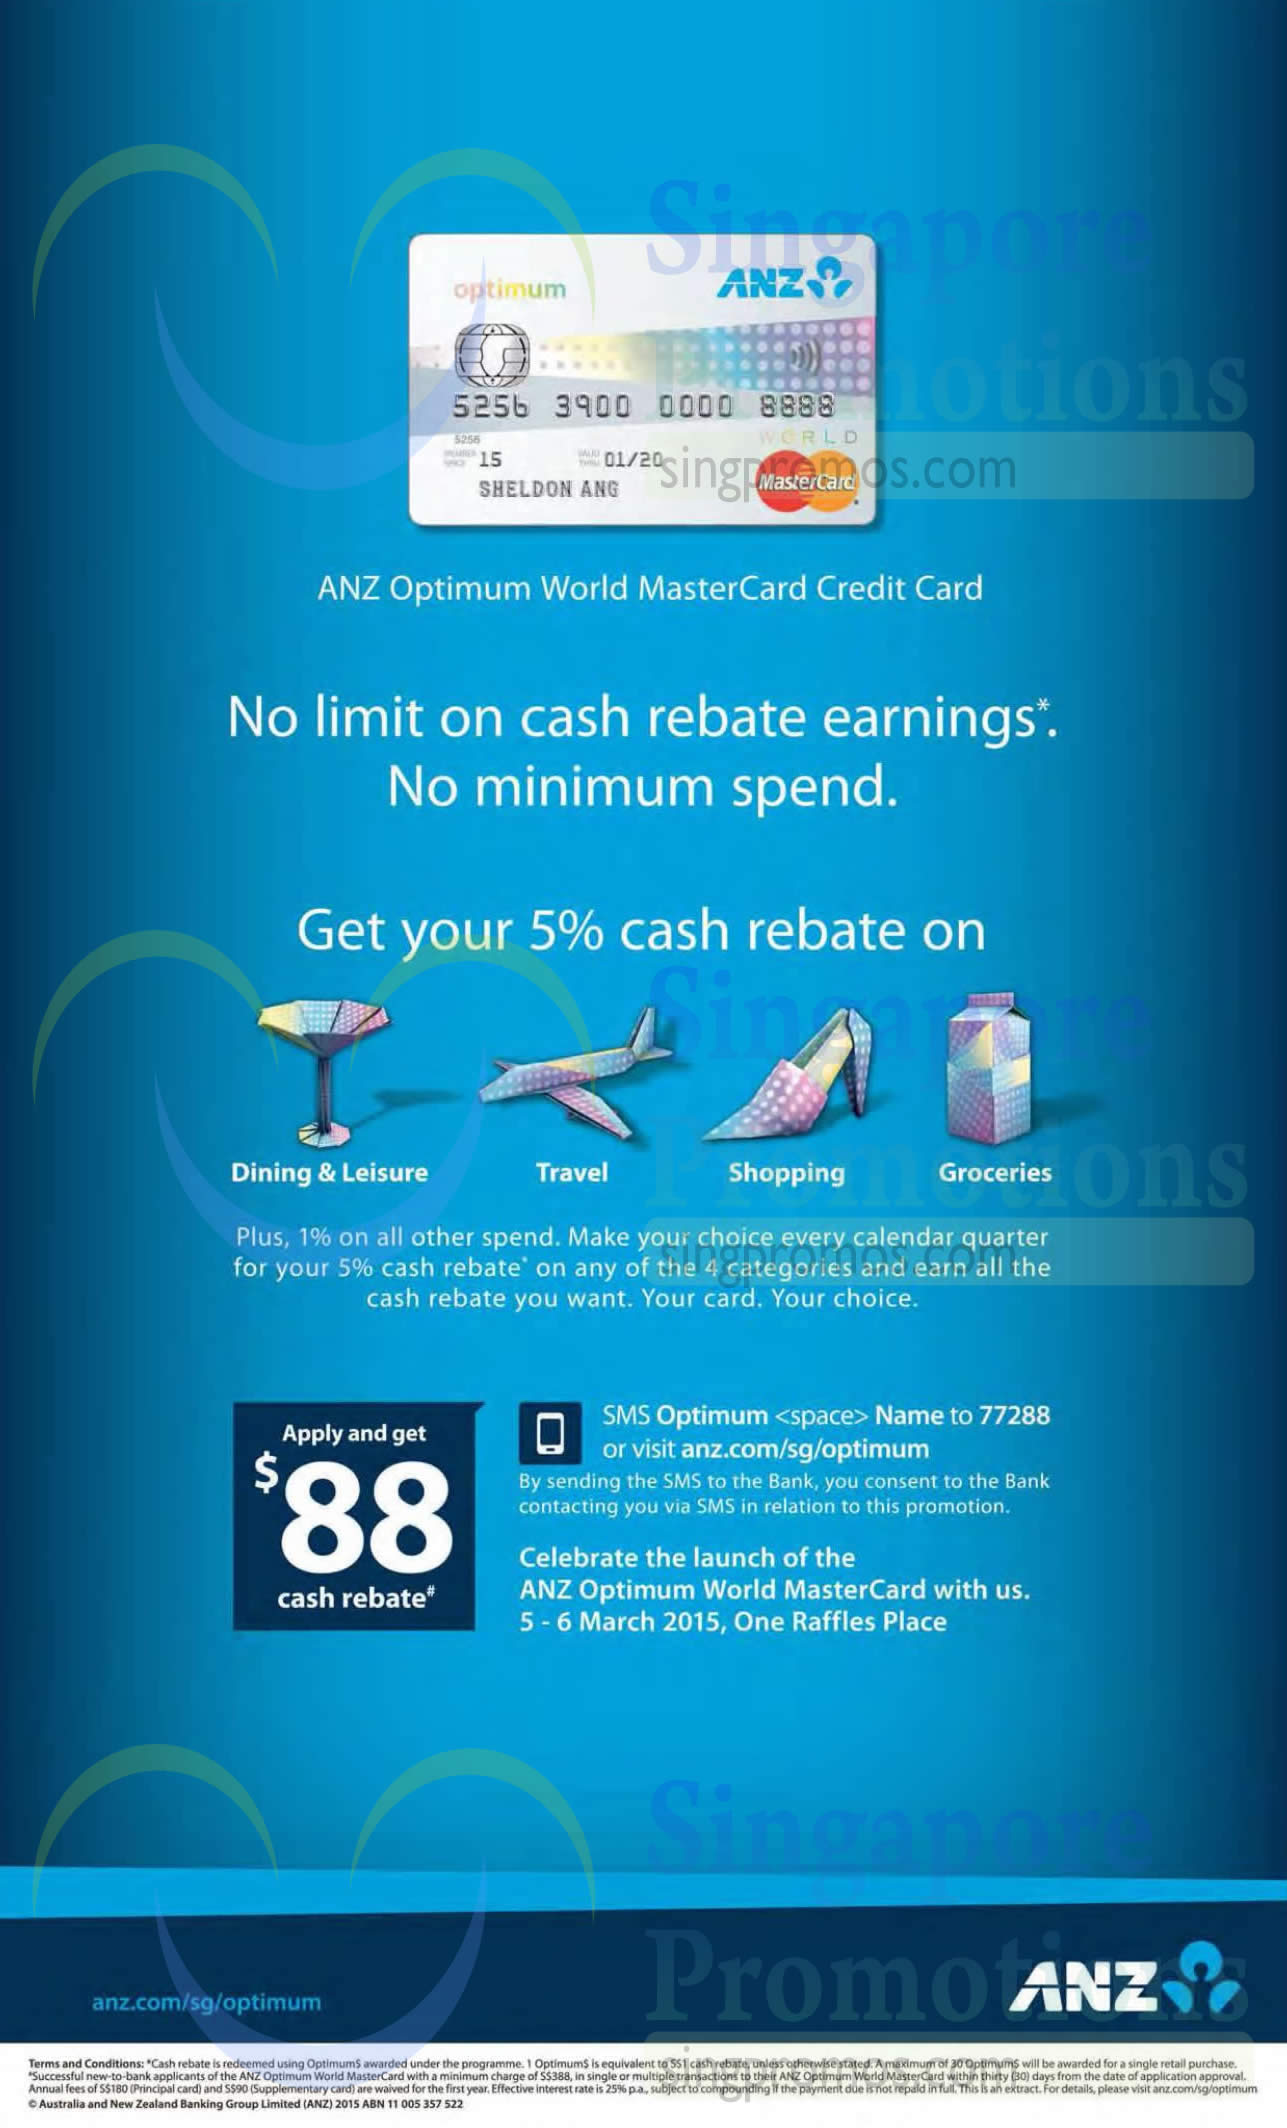 anz-new-5-cash-rebate-optimum-world-mastercard-credit-card-5-mar-2015